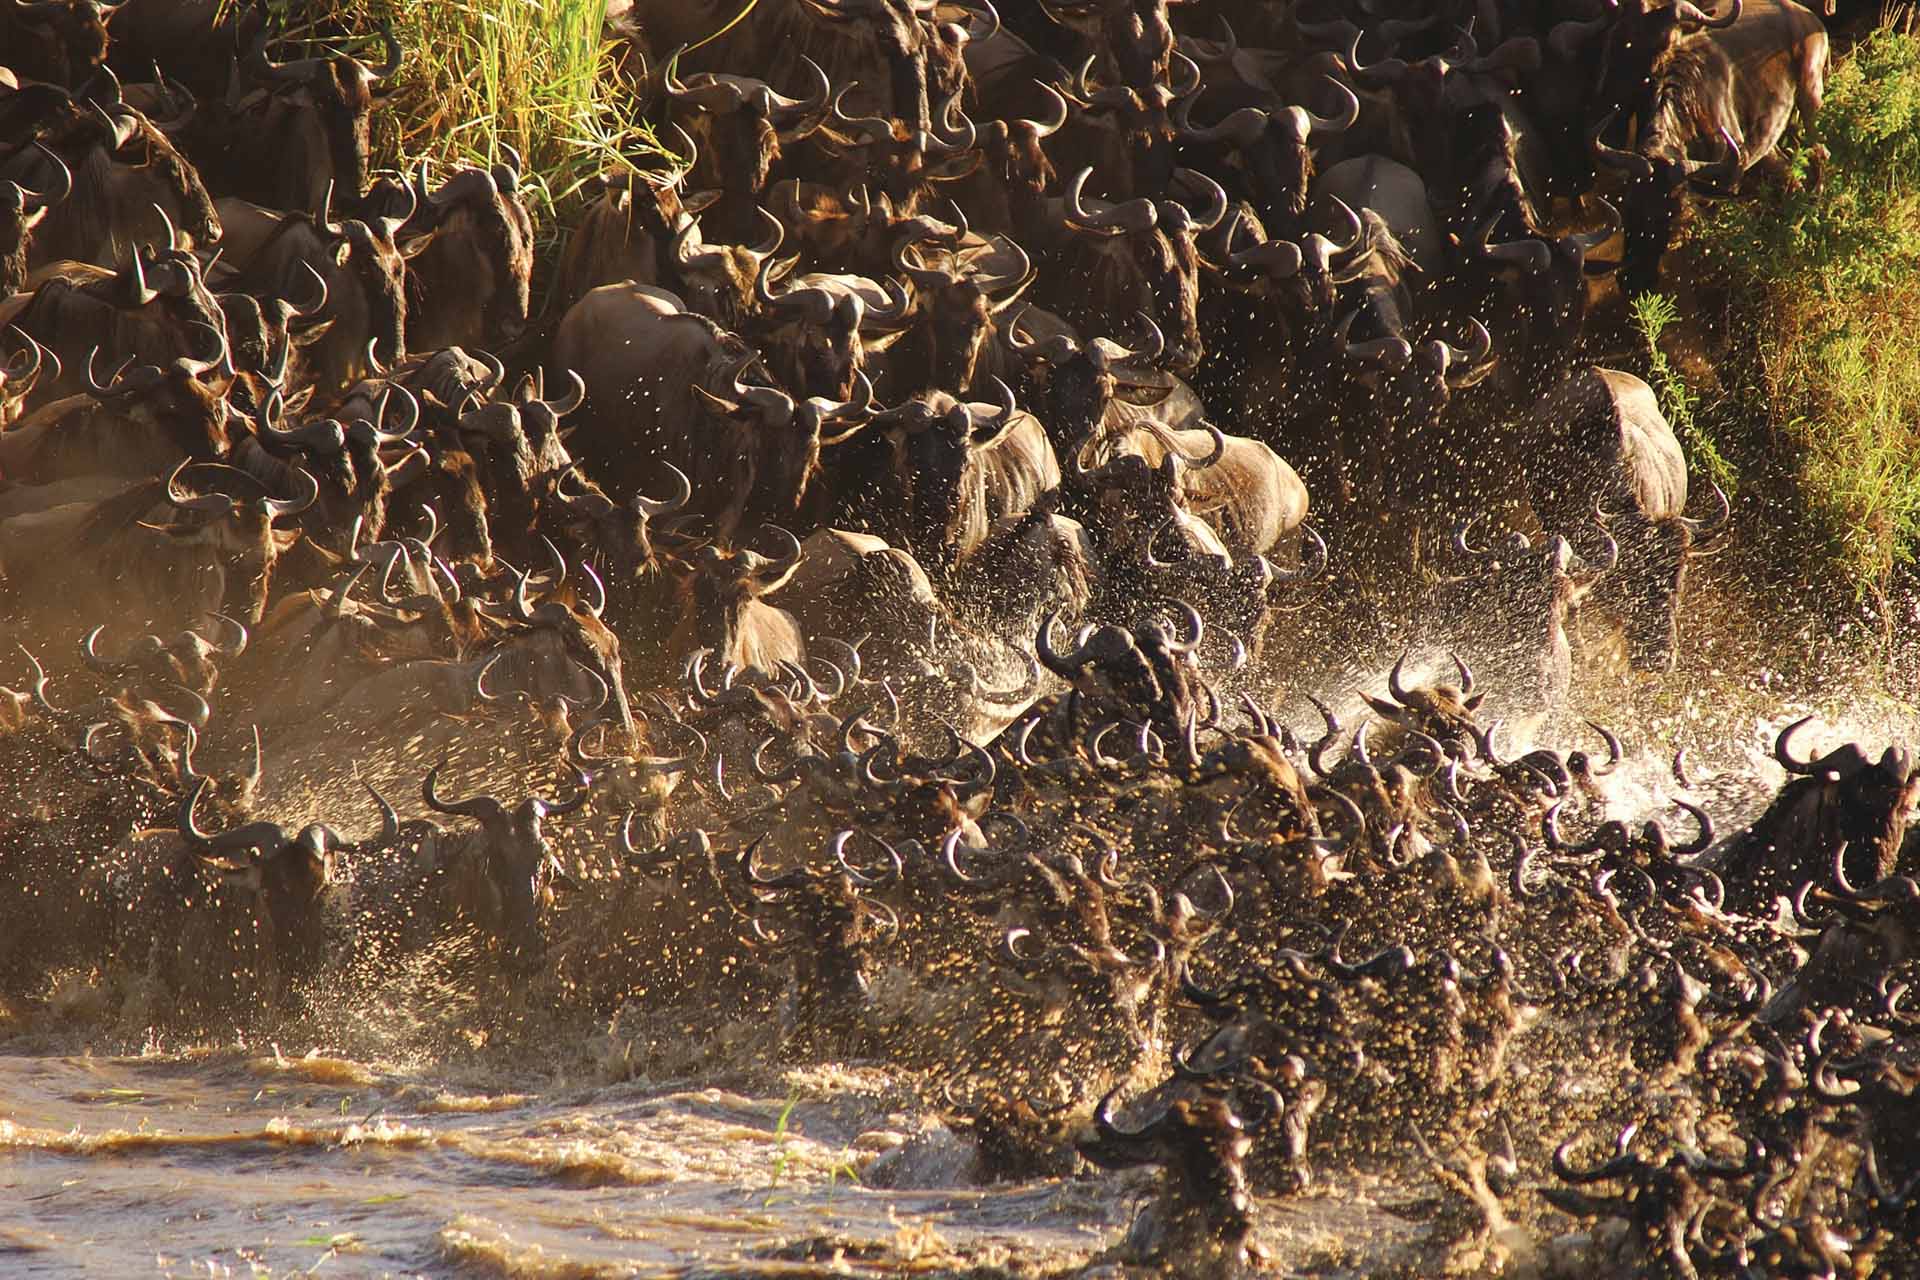 River crossing season of the wildebeest